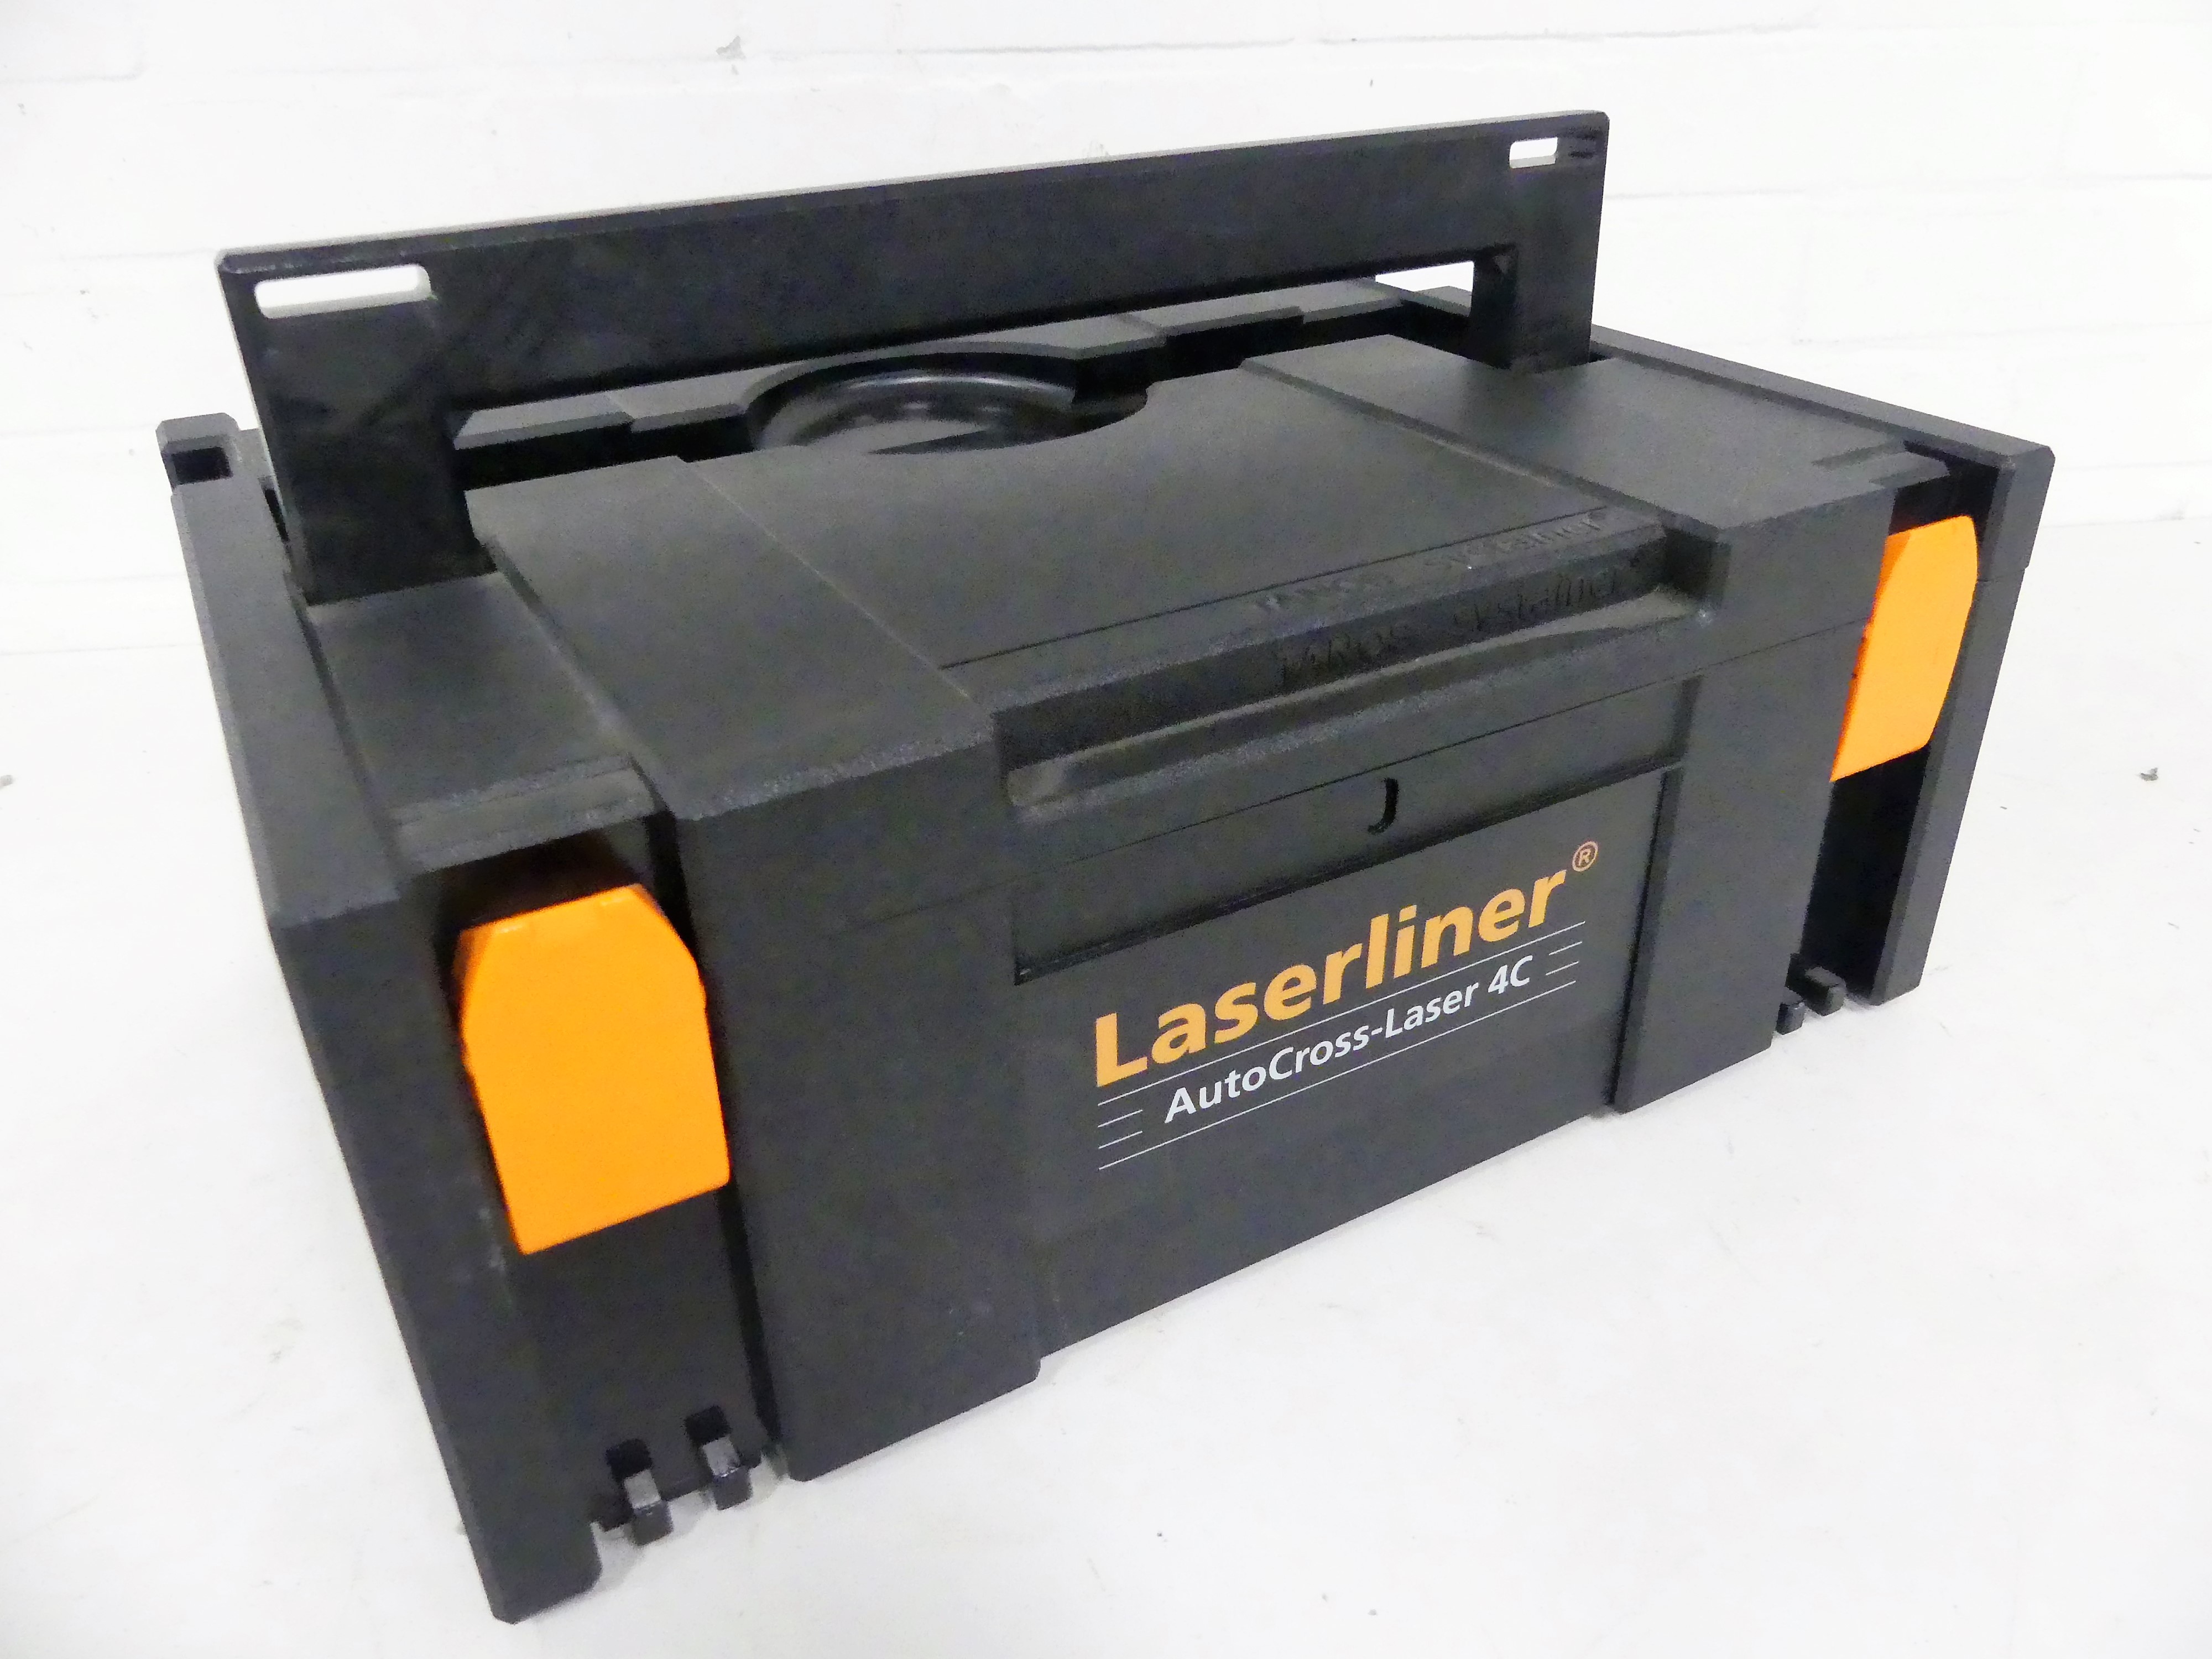 Laserline Autocross-Laser 4C